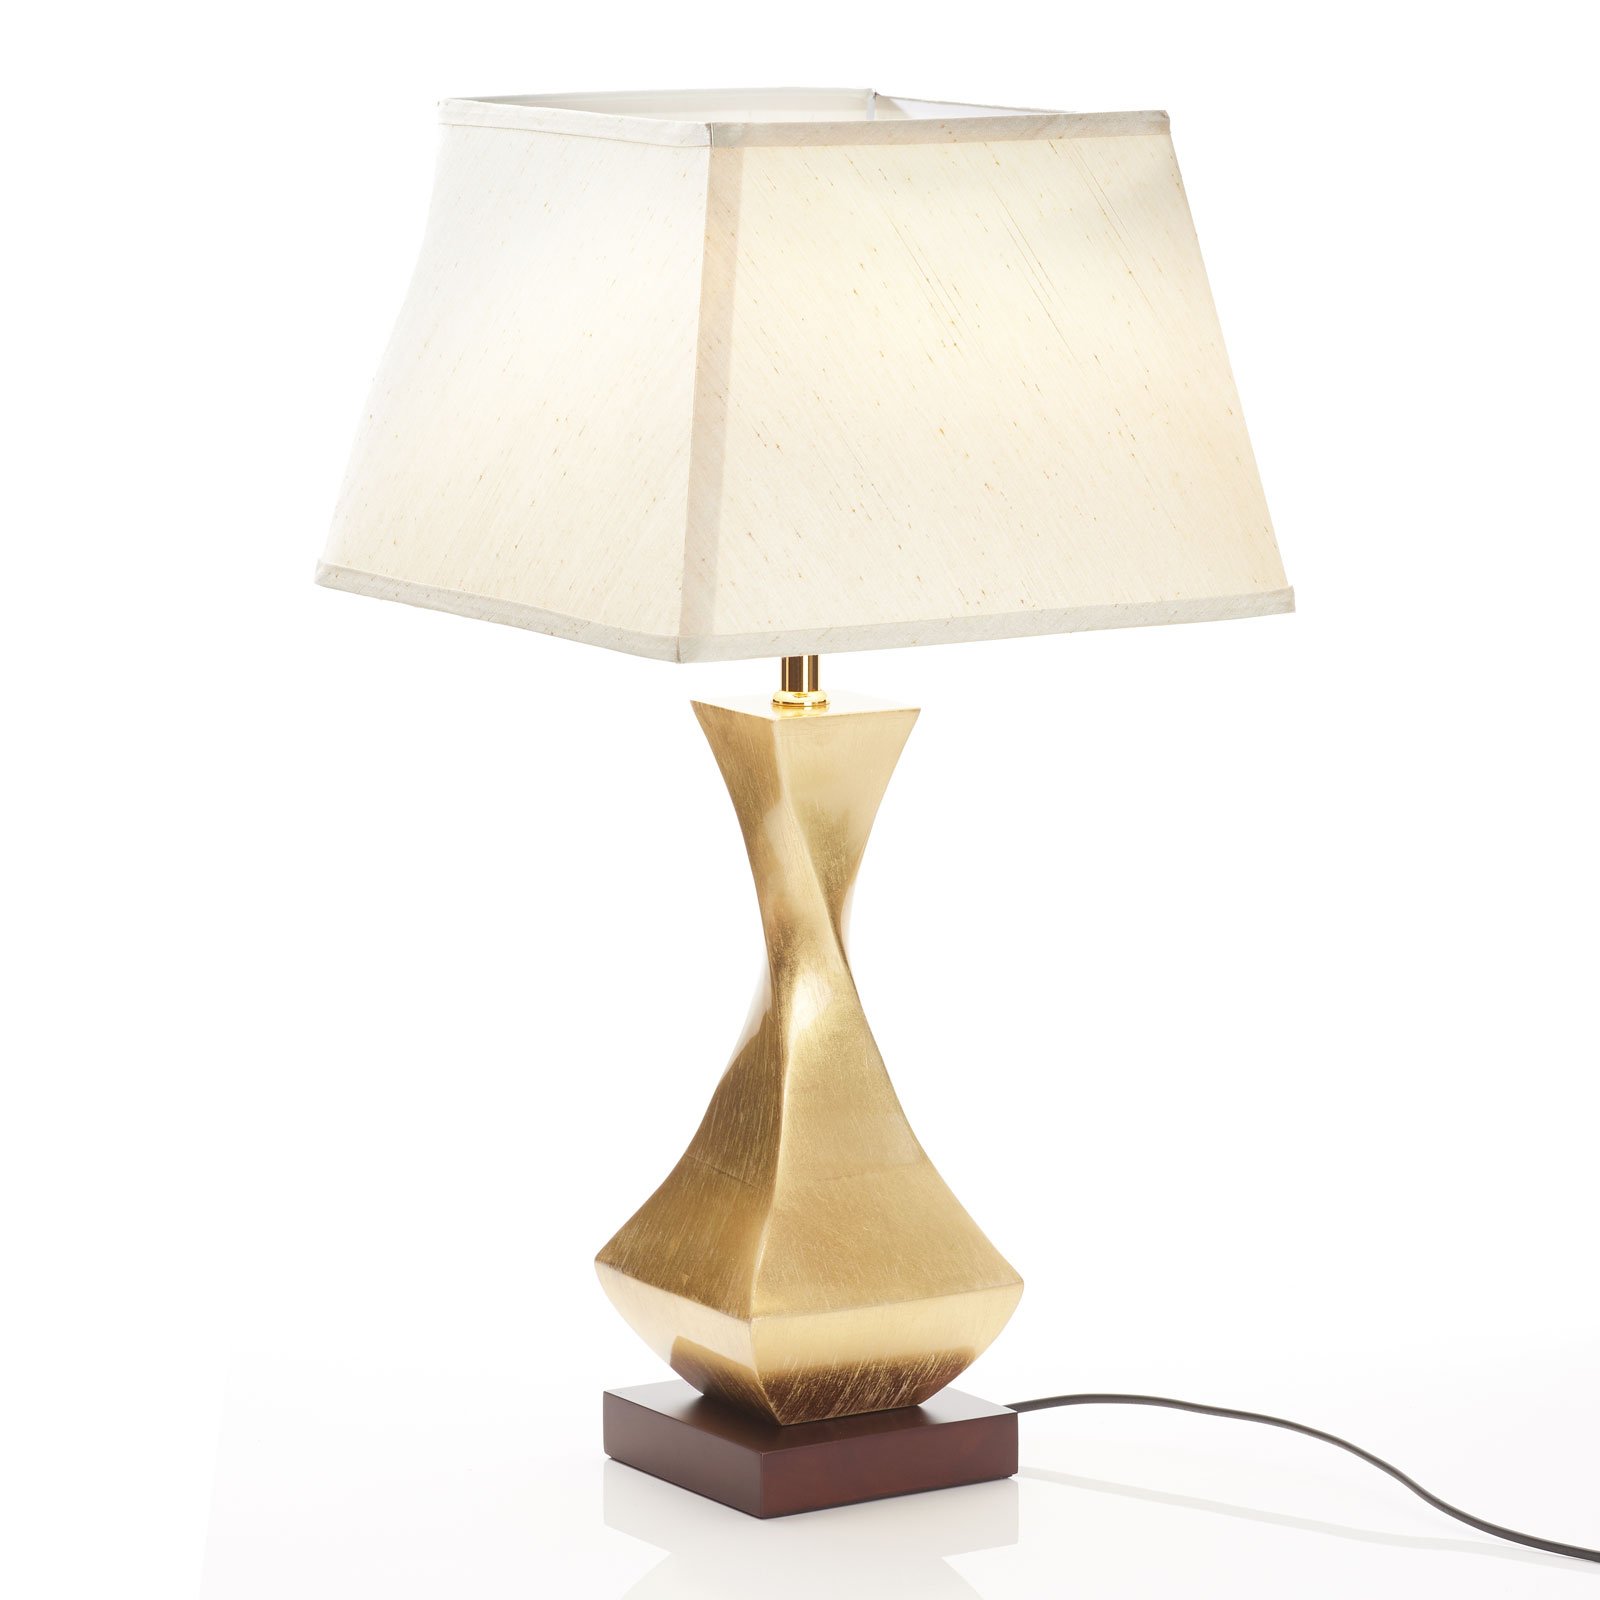 Iögonfallande bordslampa Deco med gyllene fot